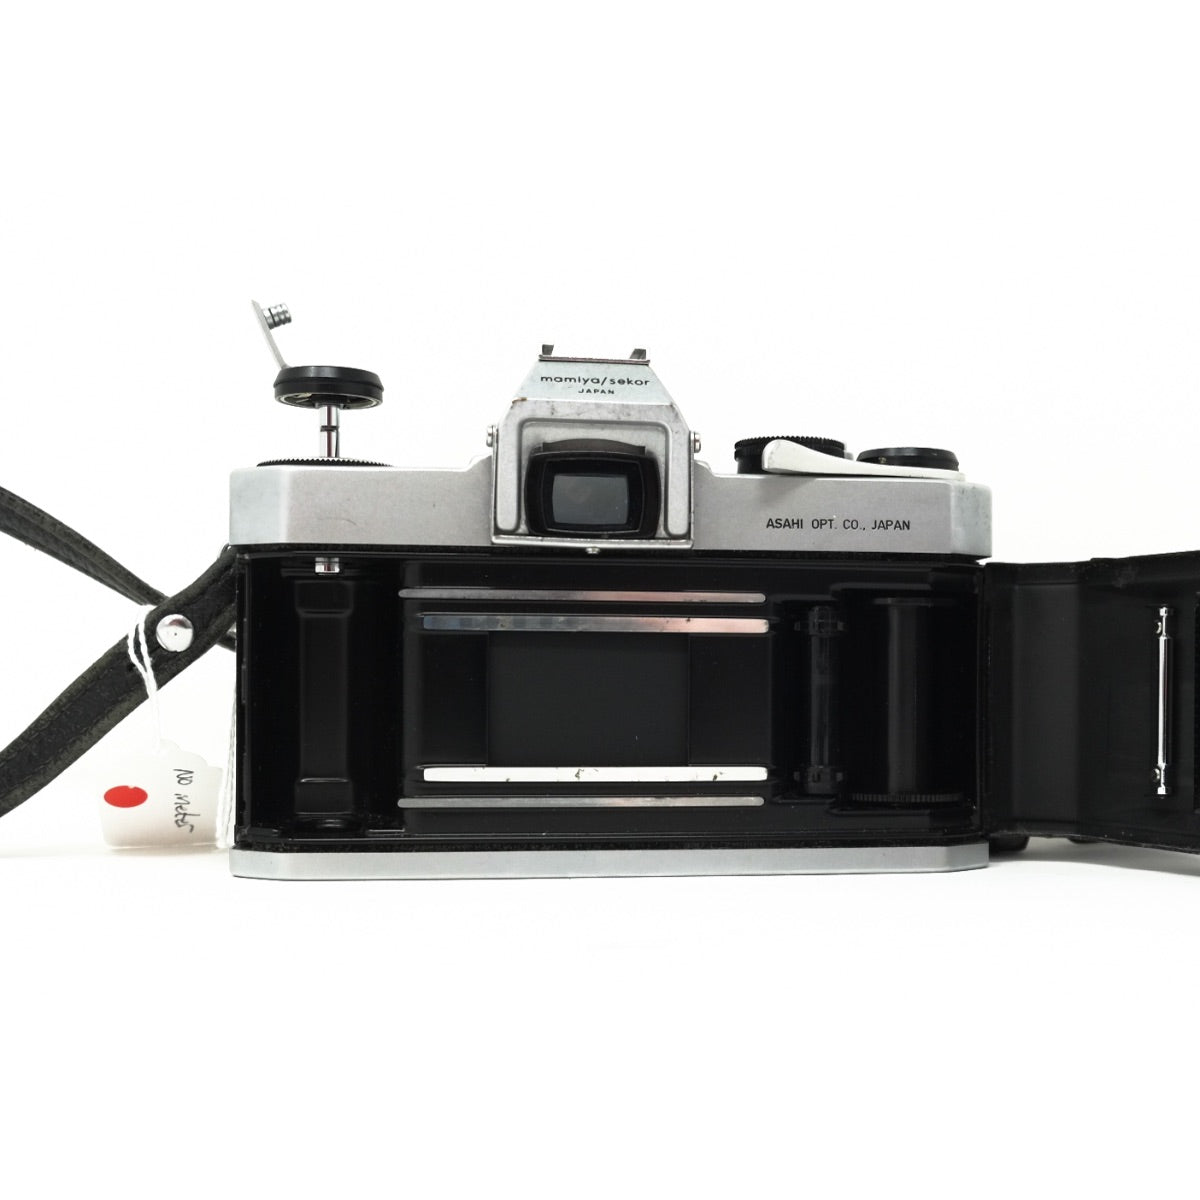 Used Pentax SP 500 Film camera body